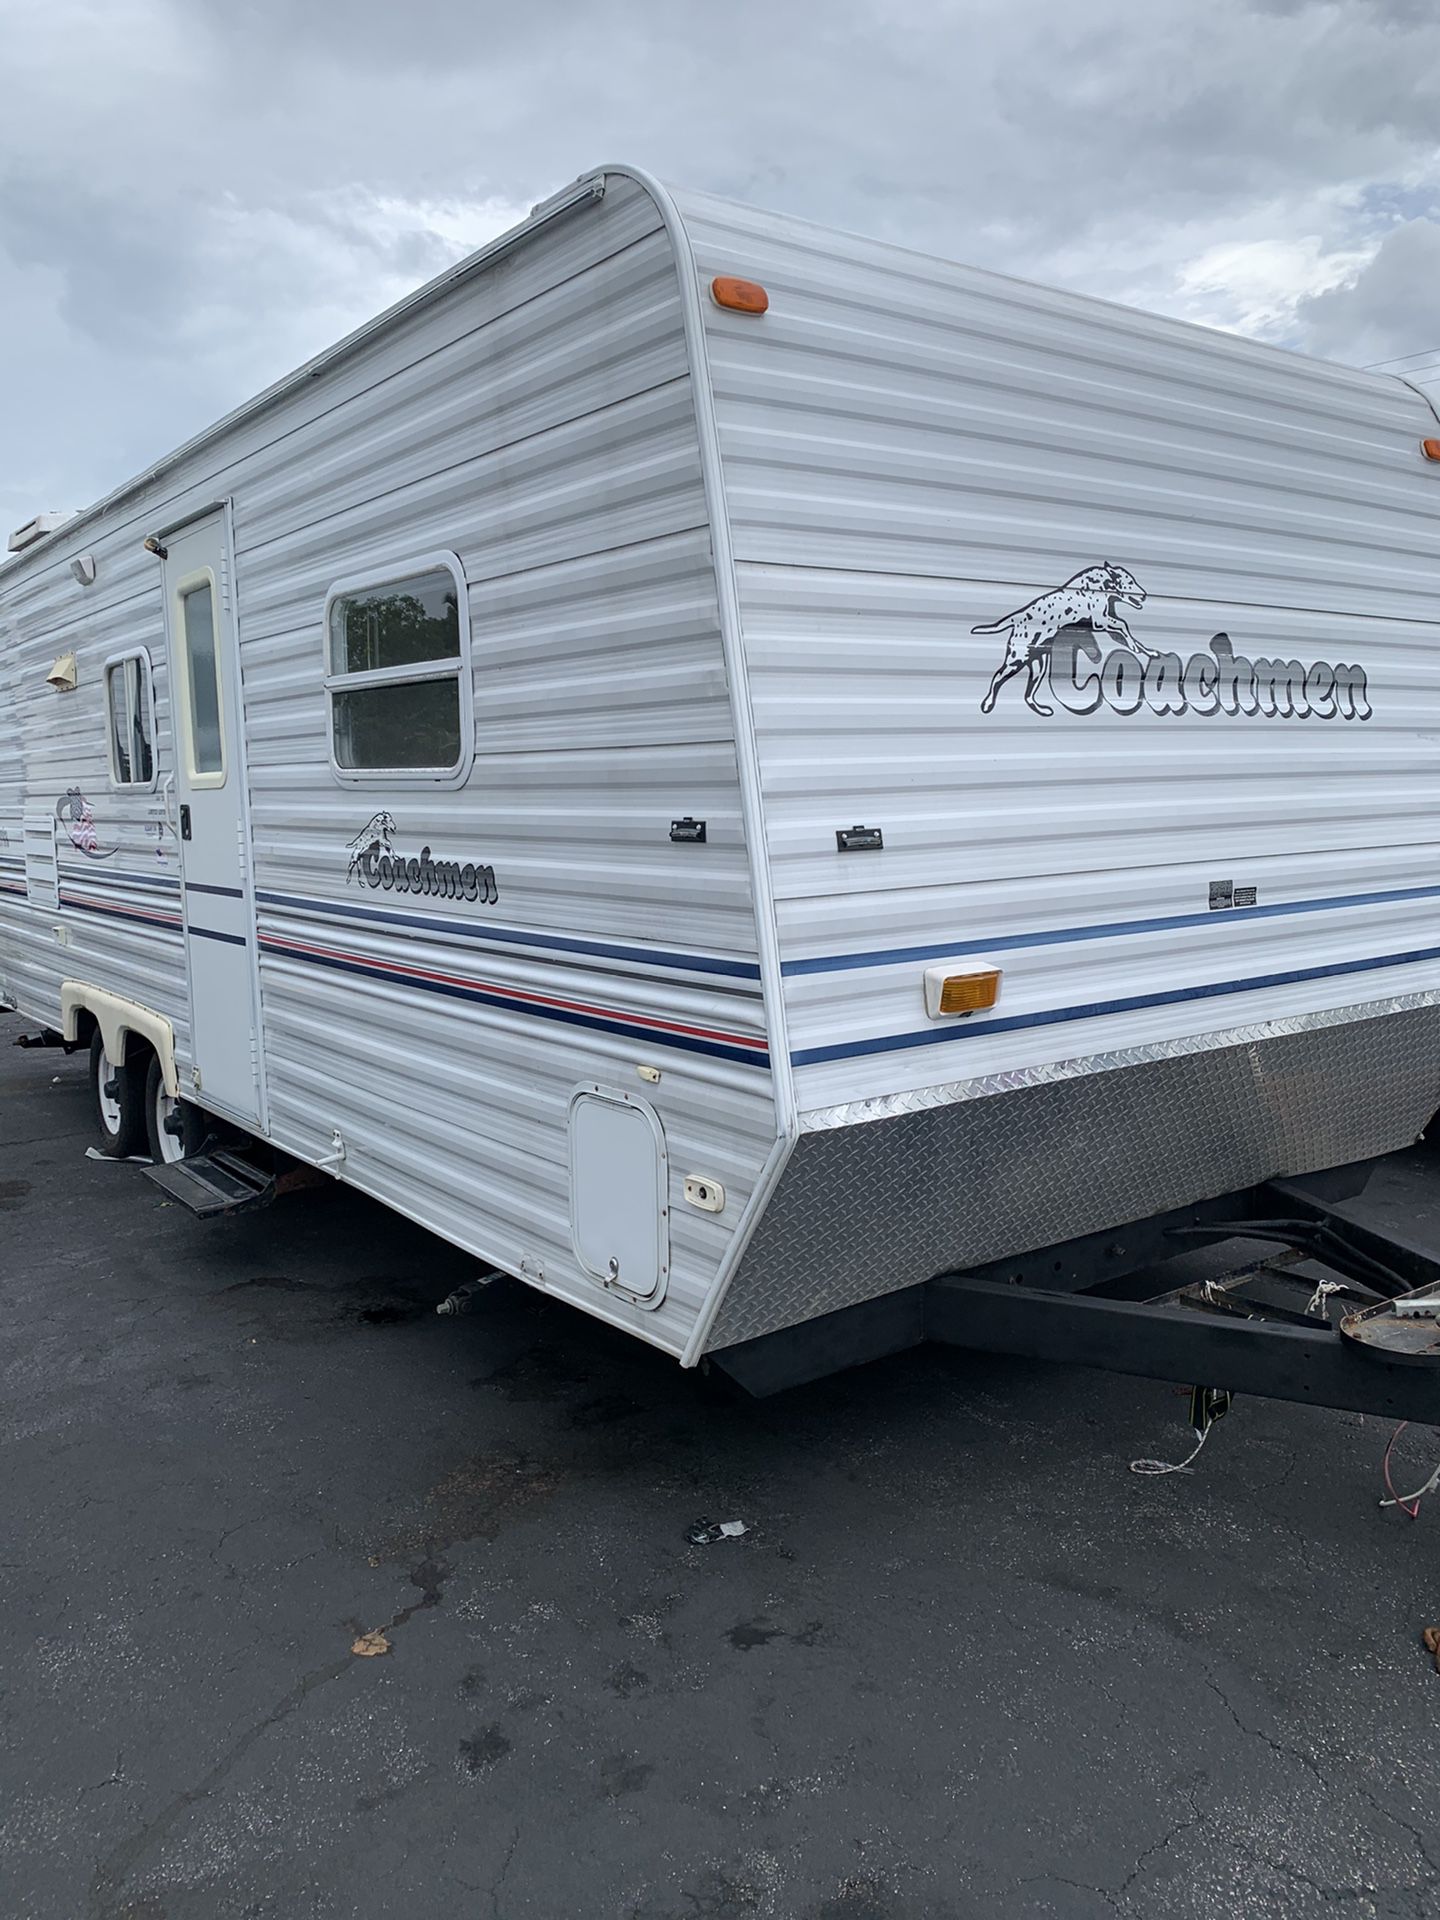 2002 Coachman RV 24 foot camper/trailer